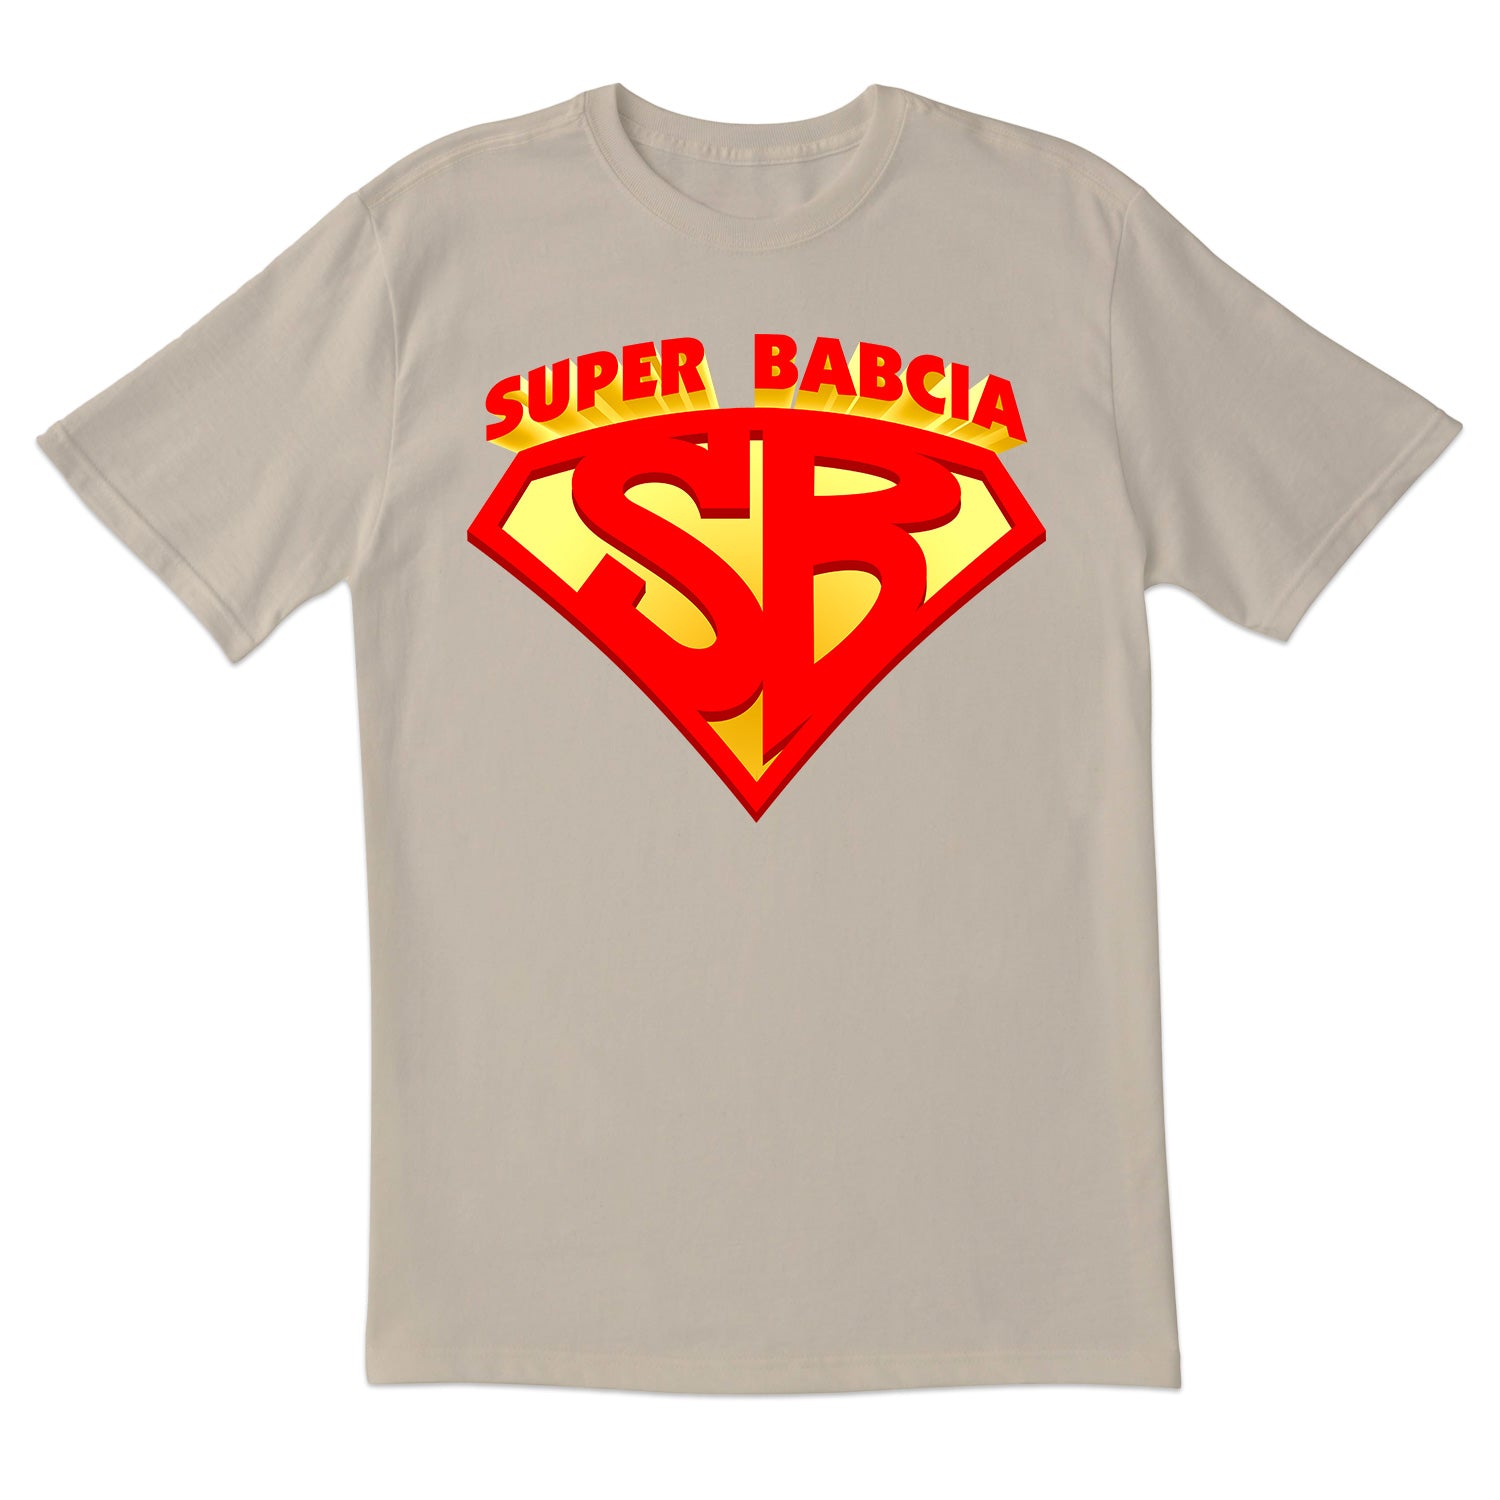 Super Babcia Short Sleeve Tshirt